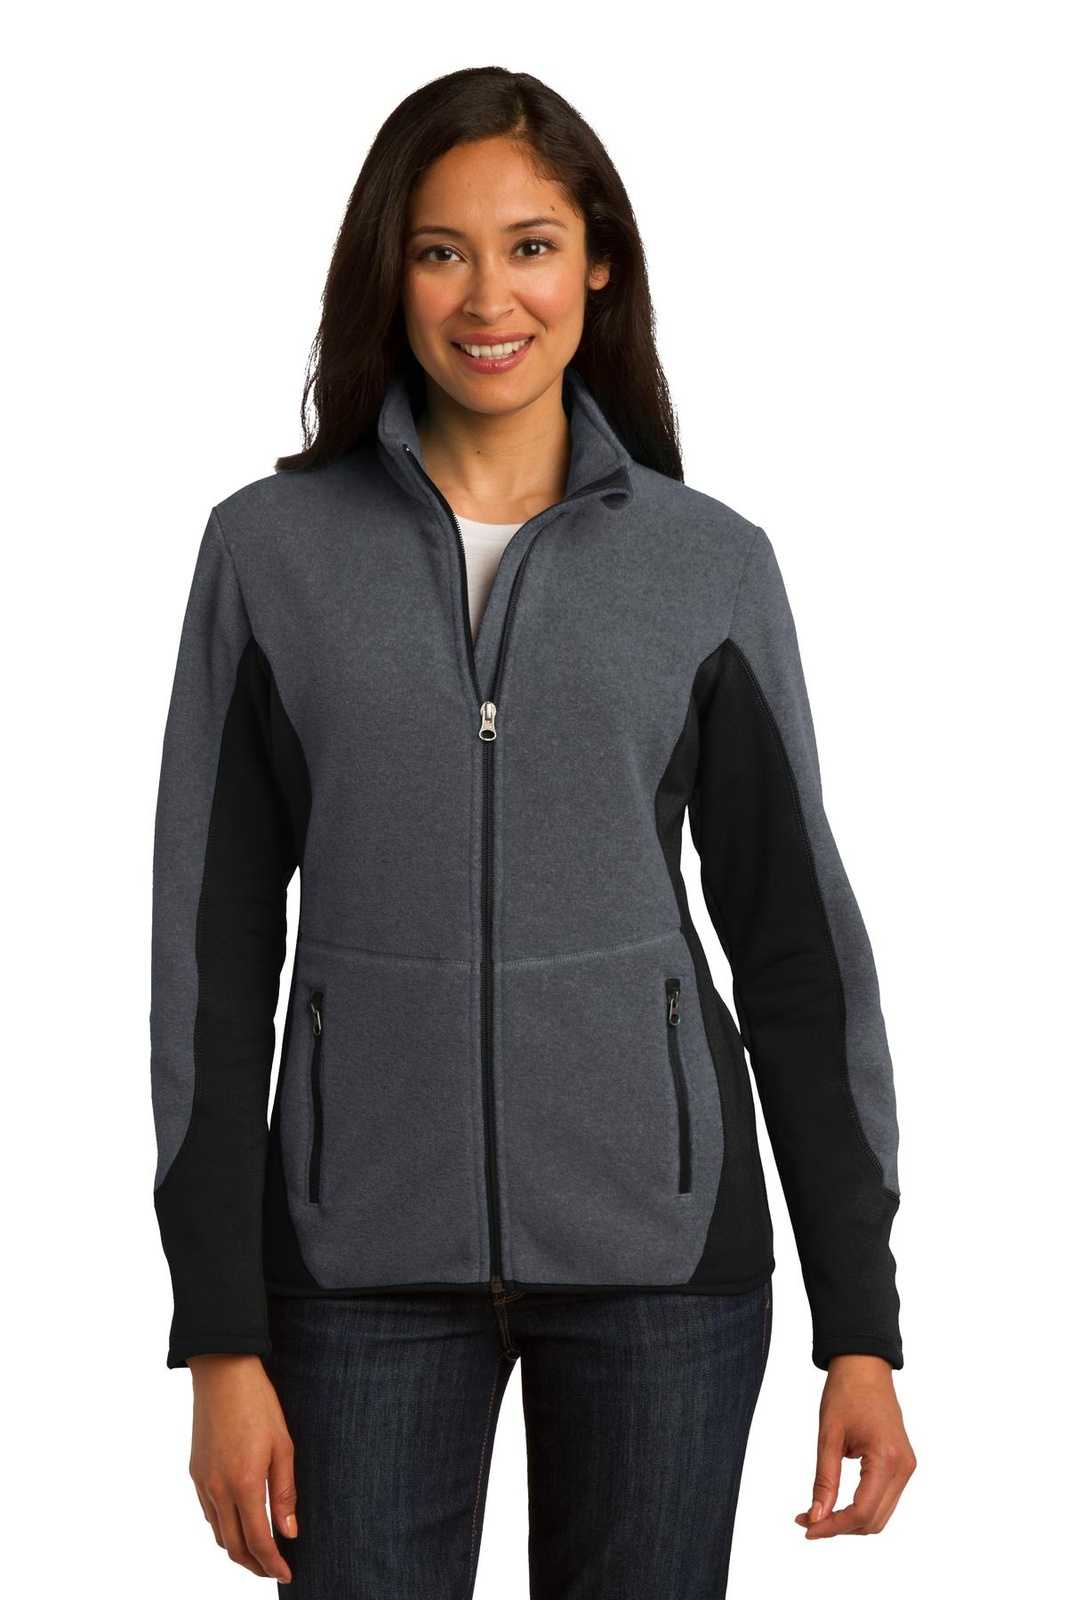 Port Authority L227 Ladies R-Tek Pro Fleece Full-Zip Jacket - Charcoal Heather Black - HIT a Double - 1